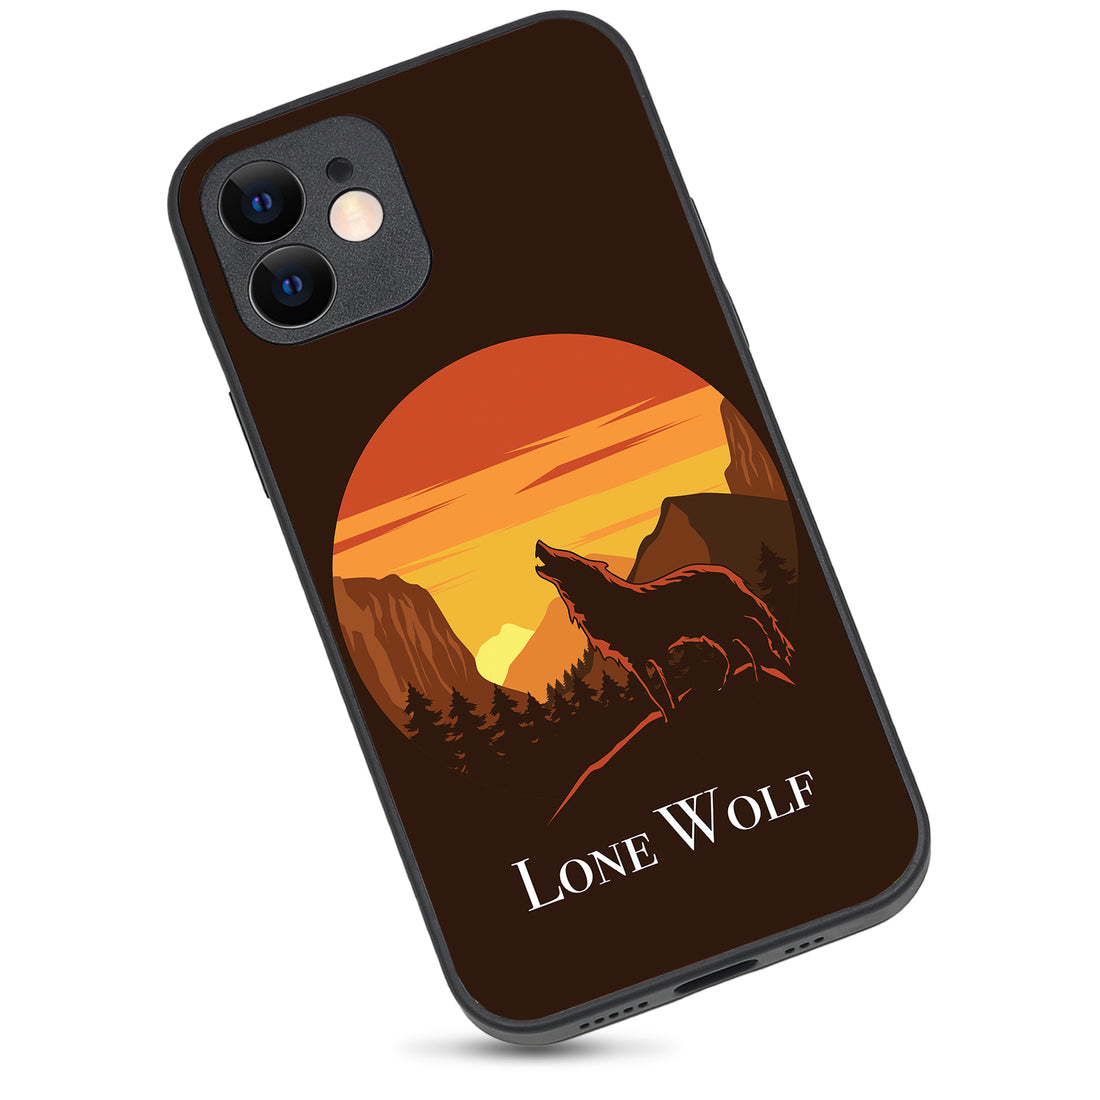 Lone Wolf Cartoon iPhone 12 Case